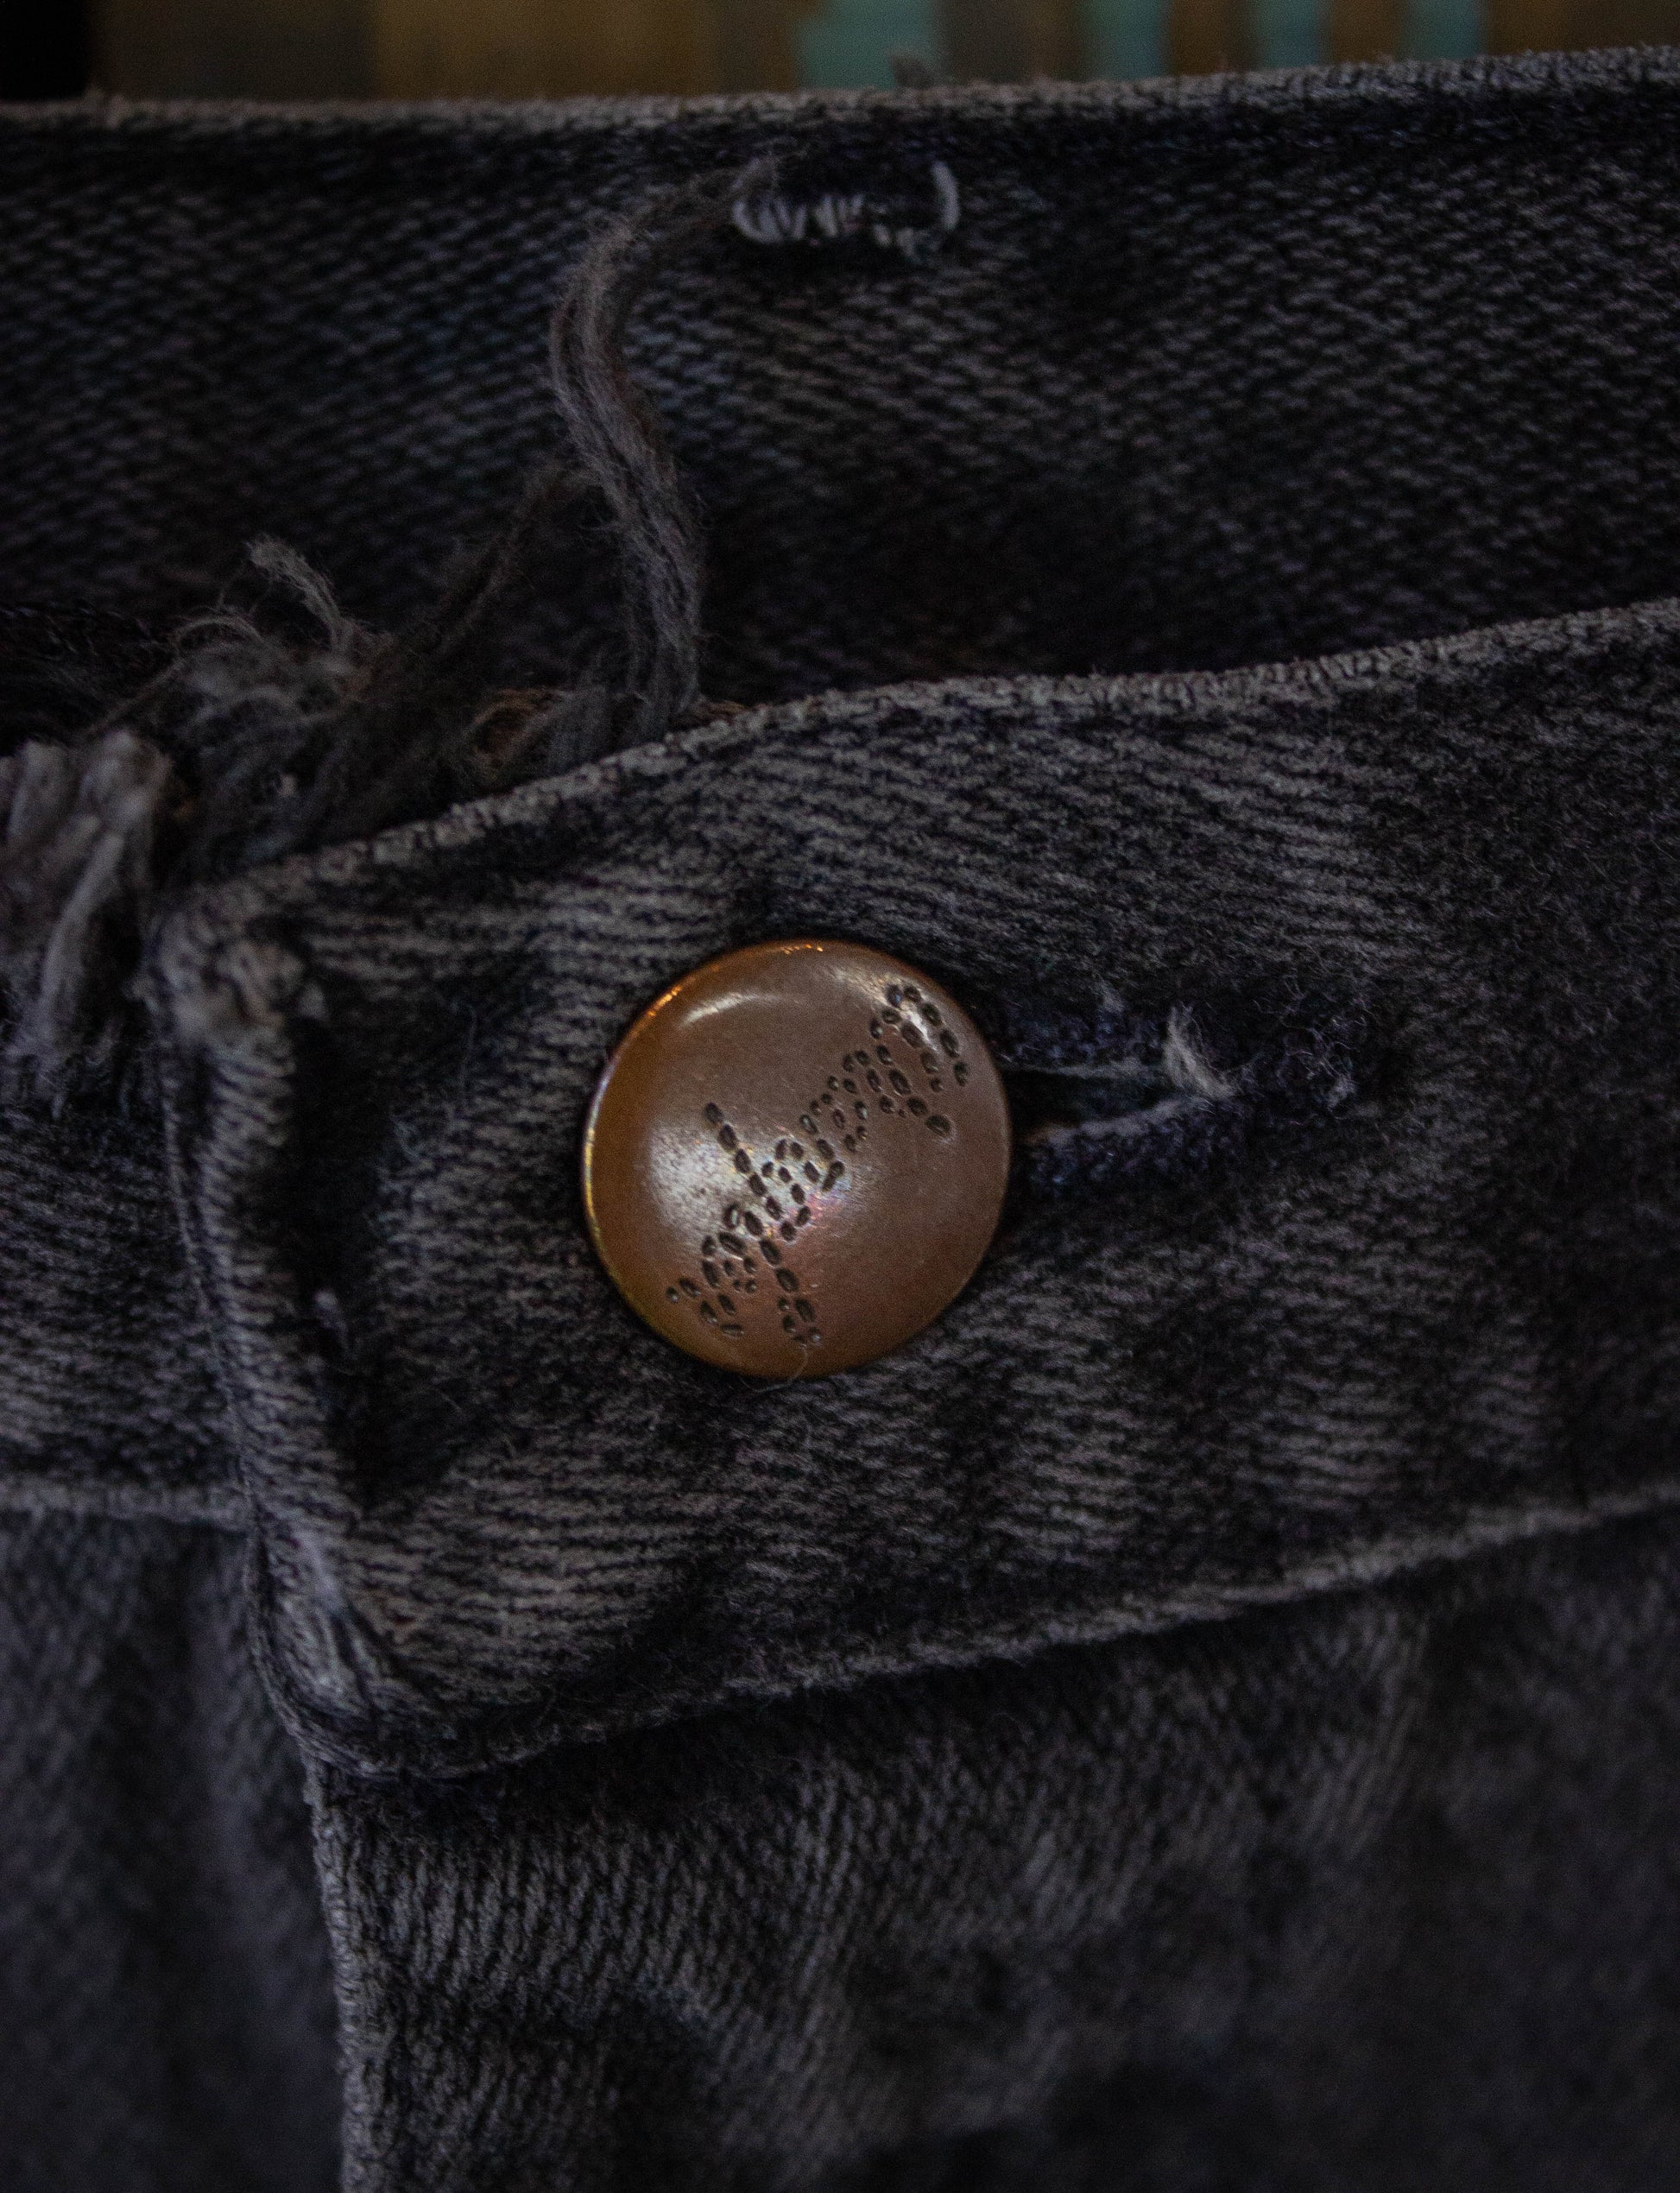 Vintage Wrangler Cutoff Denim Shorts Black 32w